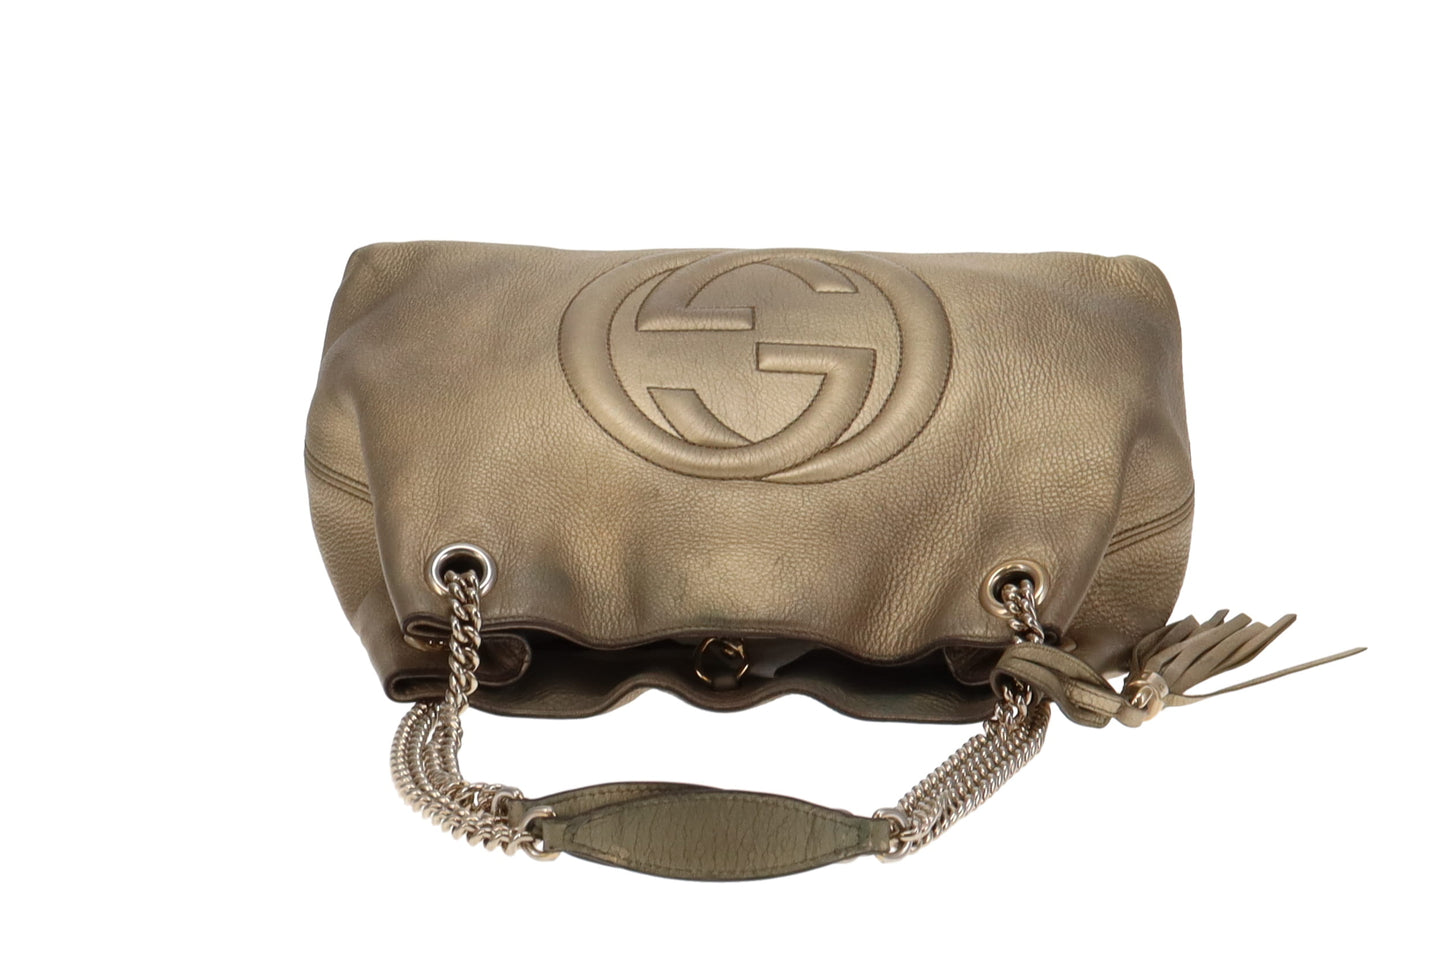 Gucci Gold Metallic Soho Chain Bag